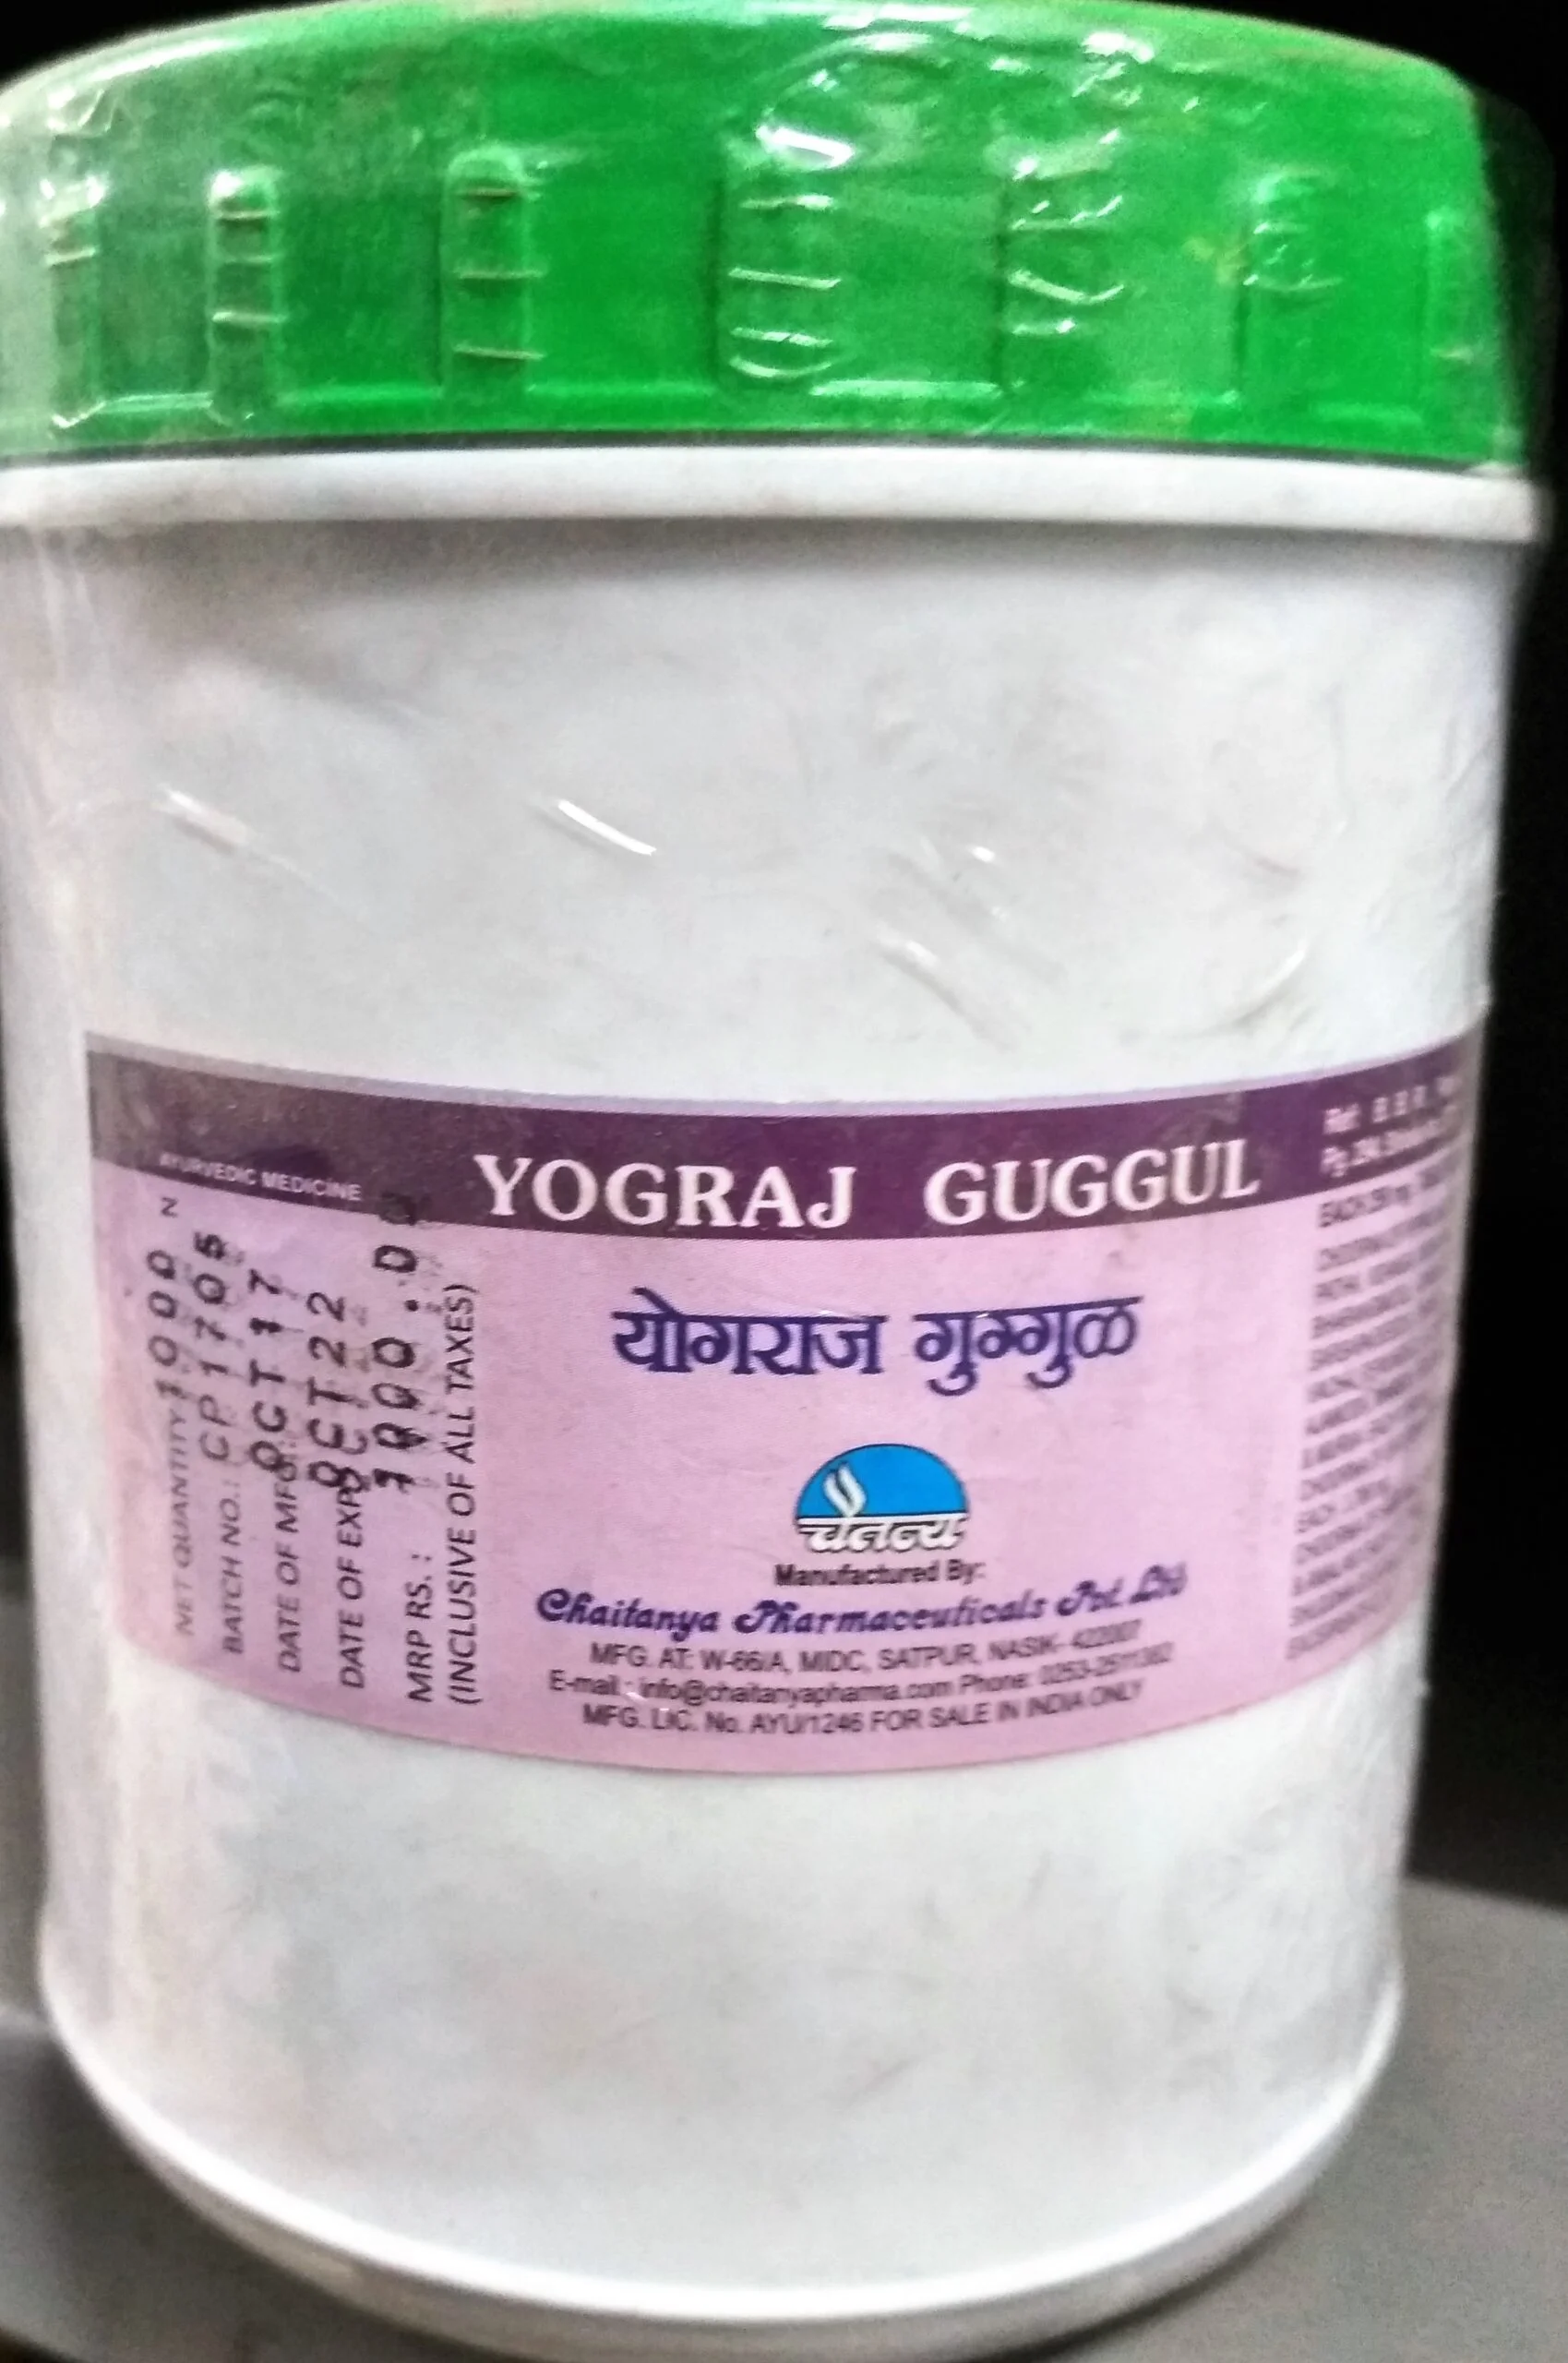 yograj guggul 4000tab upto 20% off free shipping chaitanya pharmaceuticals